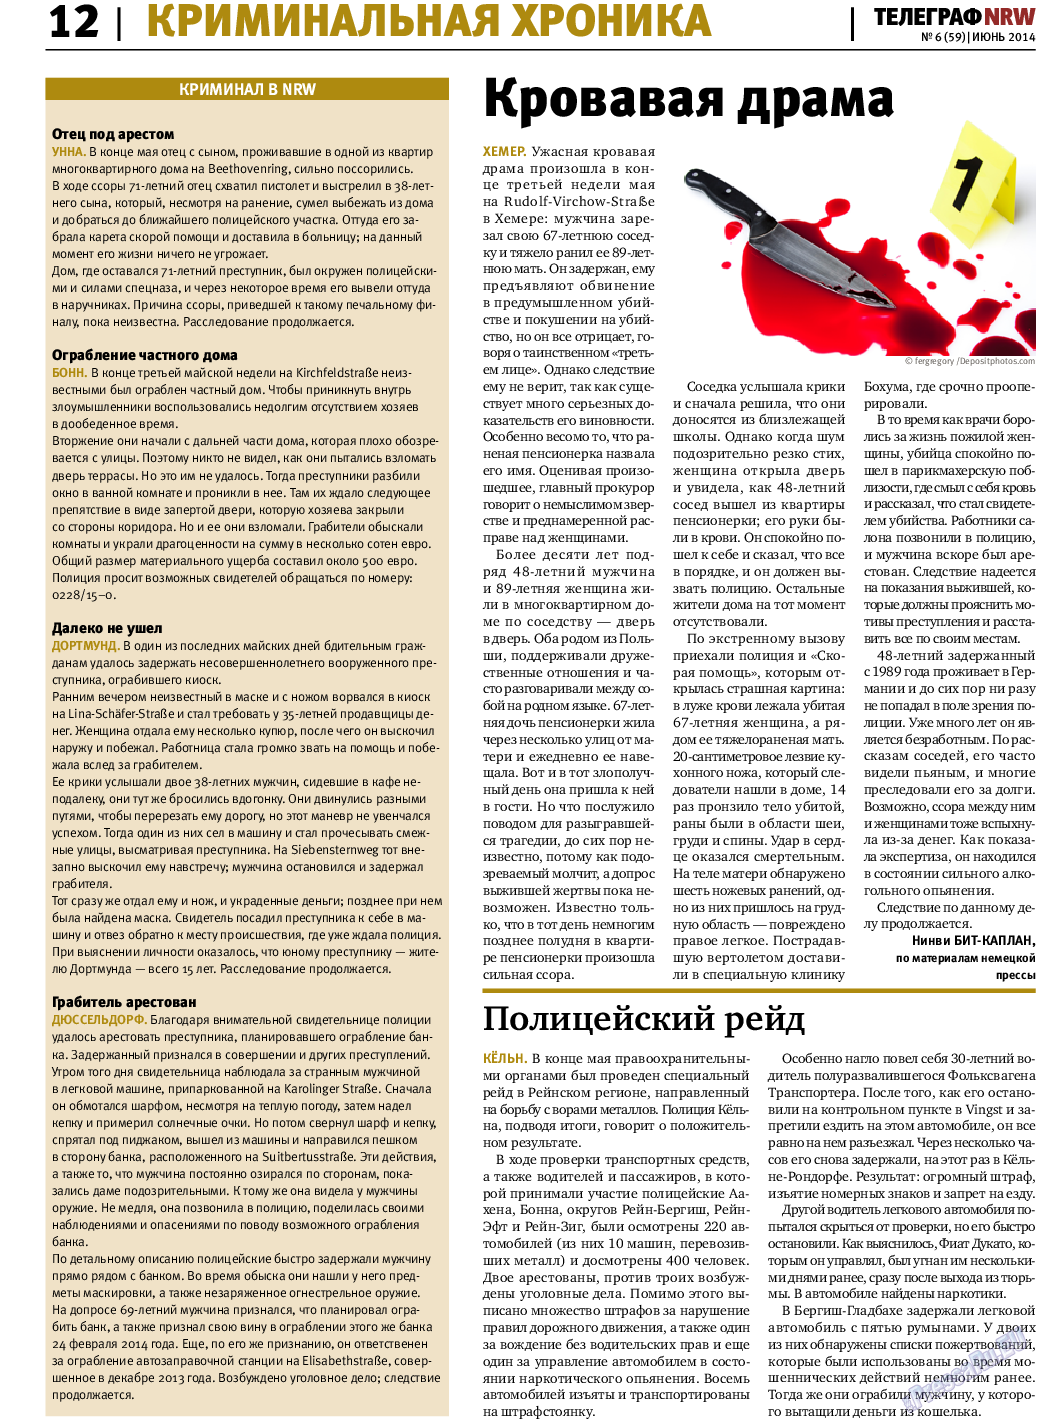 Телеграф NRW, газета. 2014 №6 стр.12